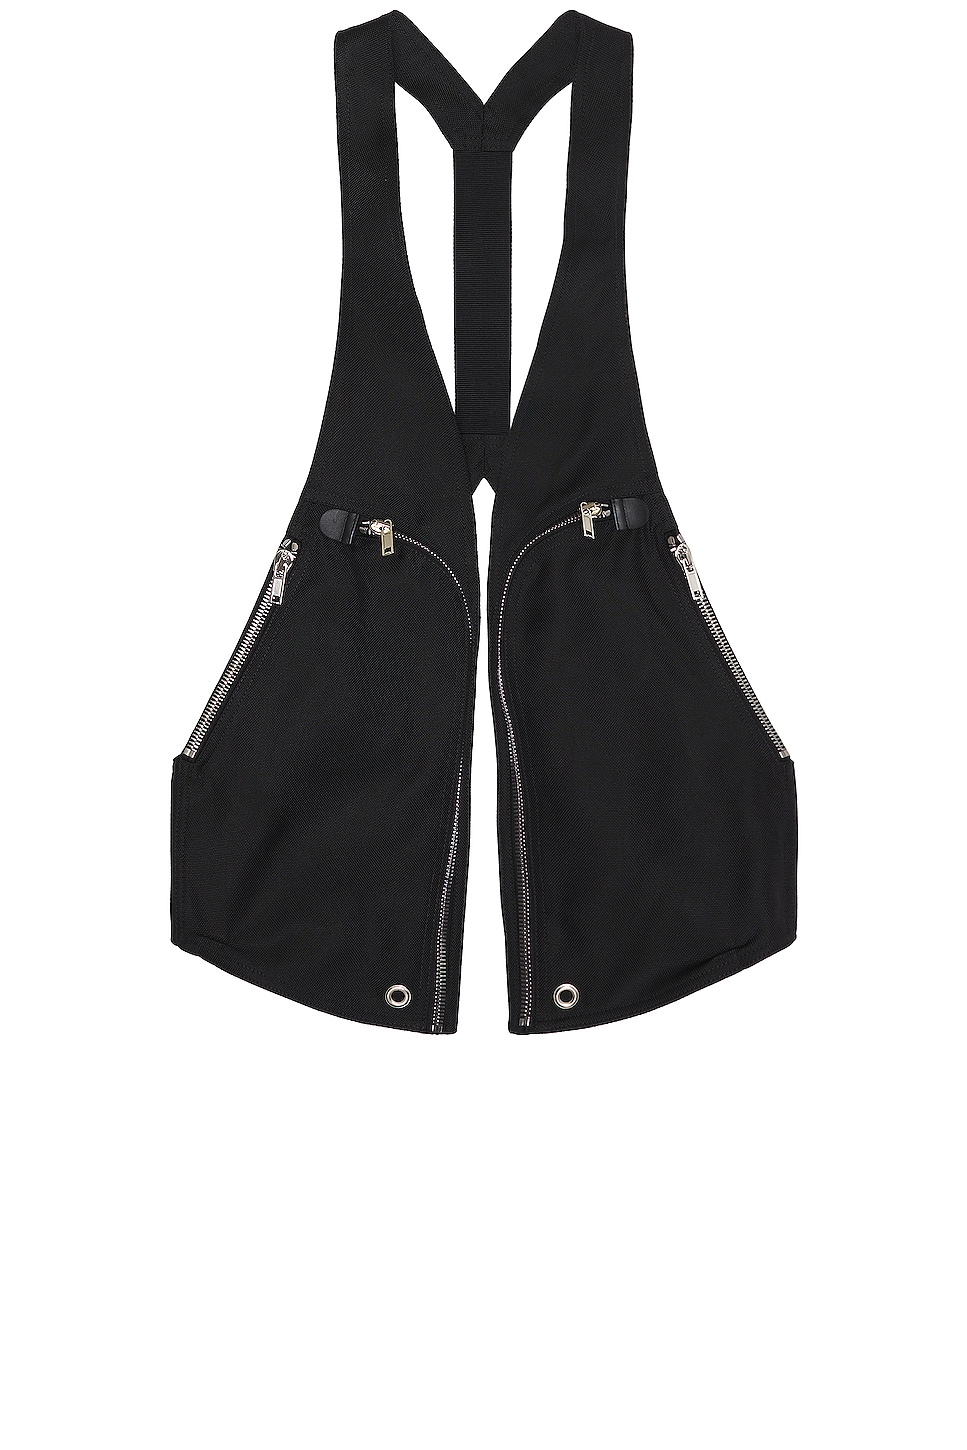 Image 1 of Rick Owens X Bonotto Bauhaus Vest in Black